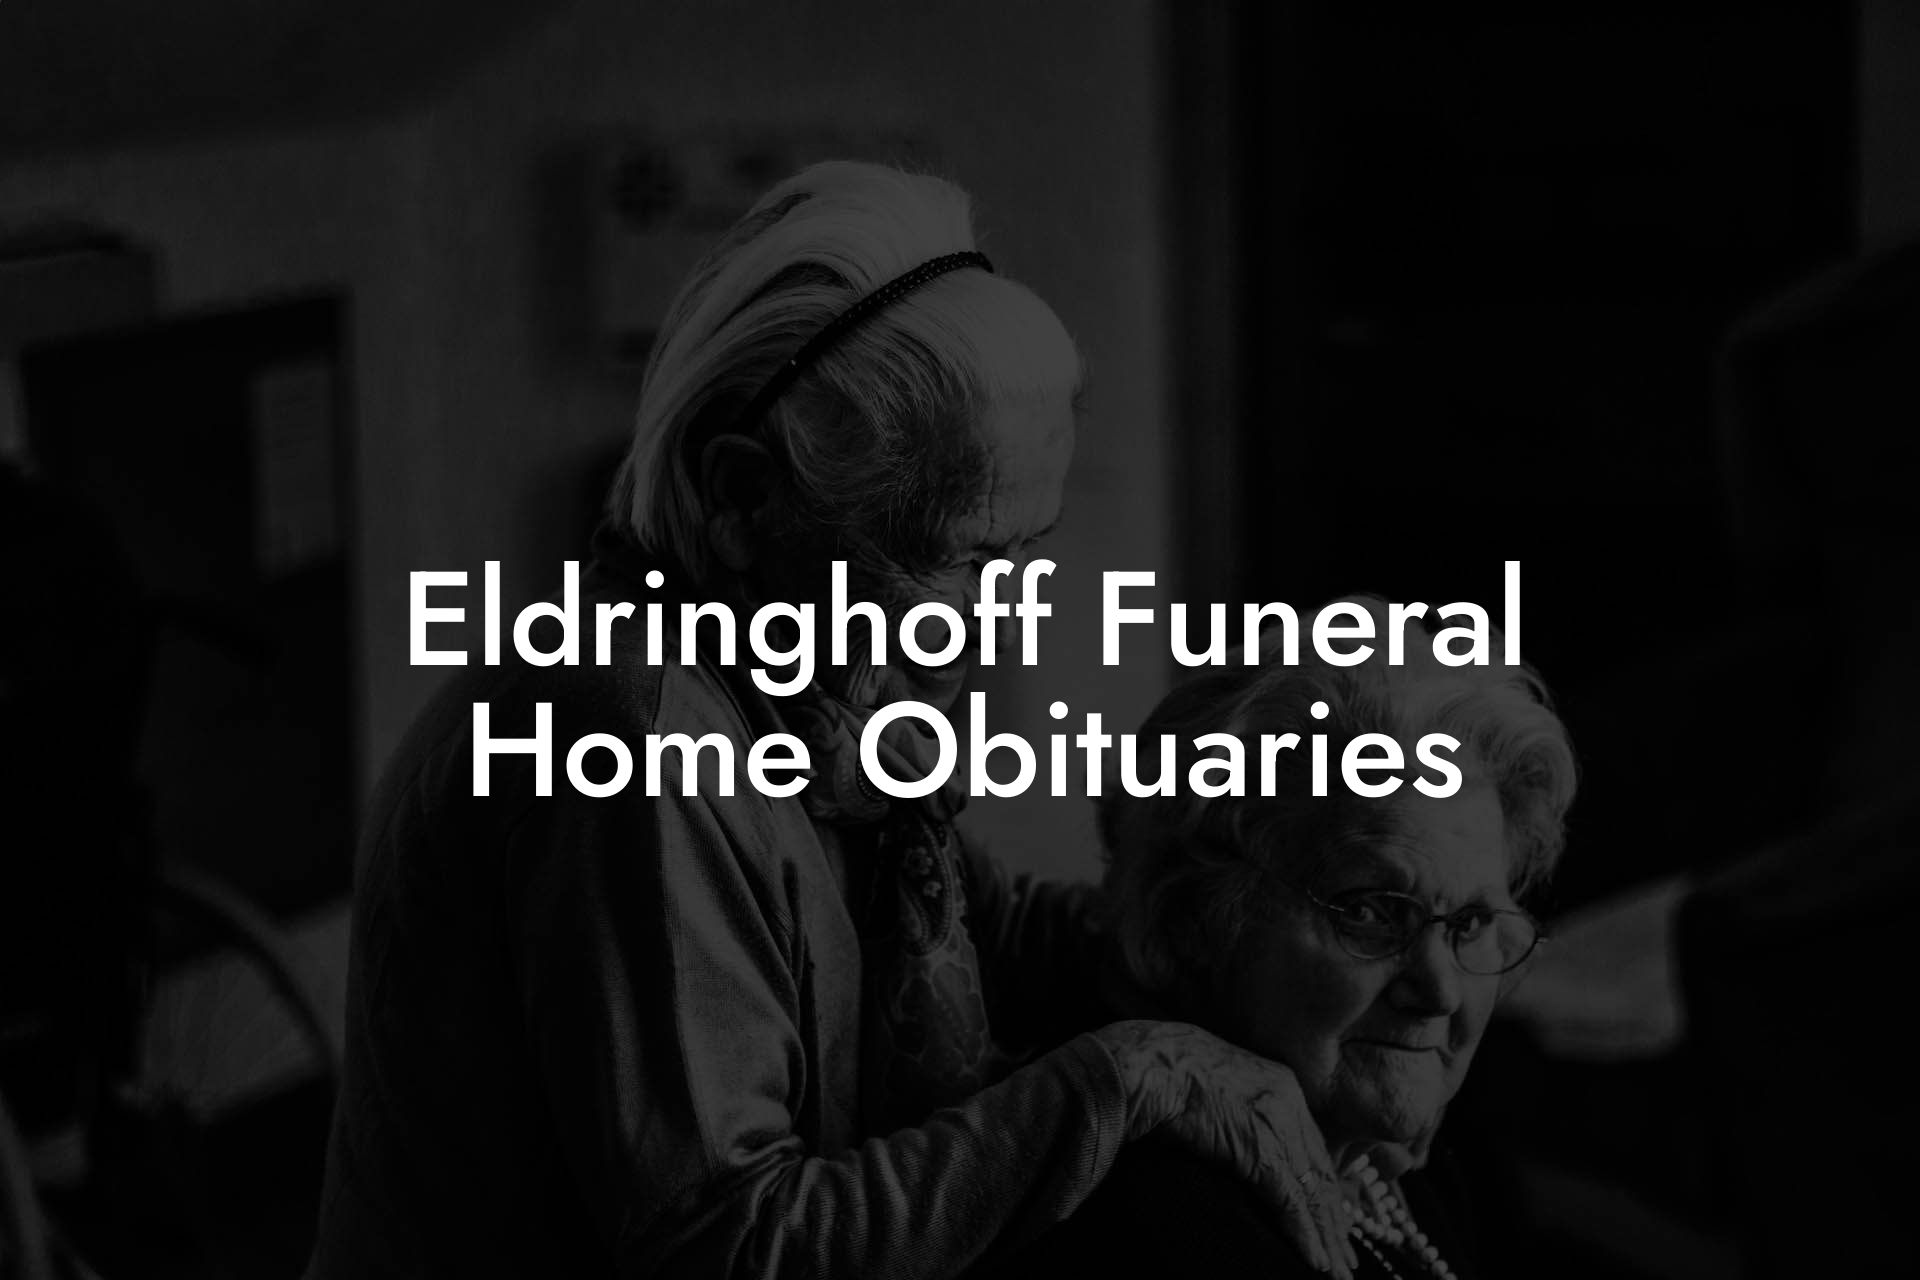 Eldringhoff Funeral Home Obituaries